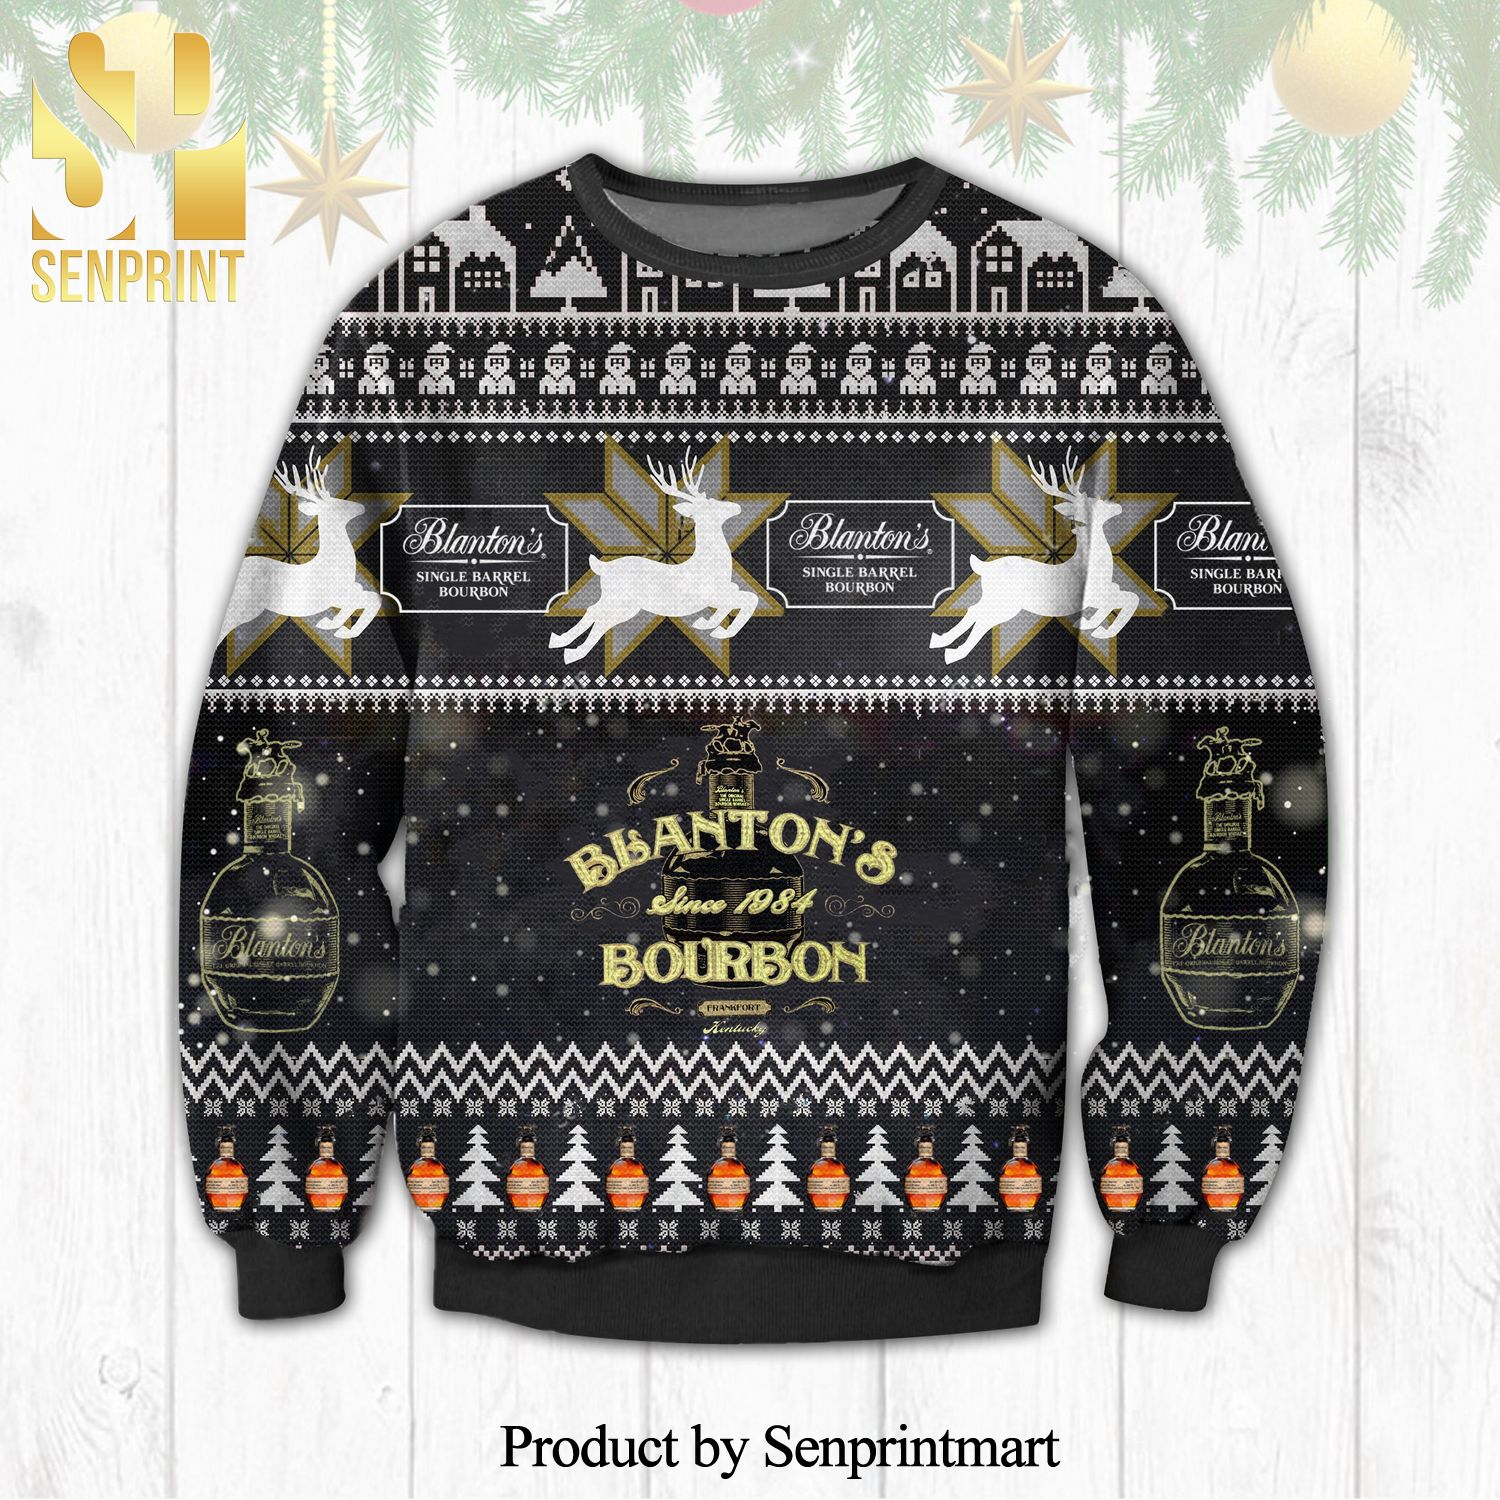 Blanton’s Original Single Barrel Bourbon Whiskey Knitted Ugly Christmas Sweater